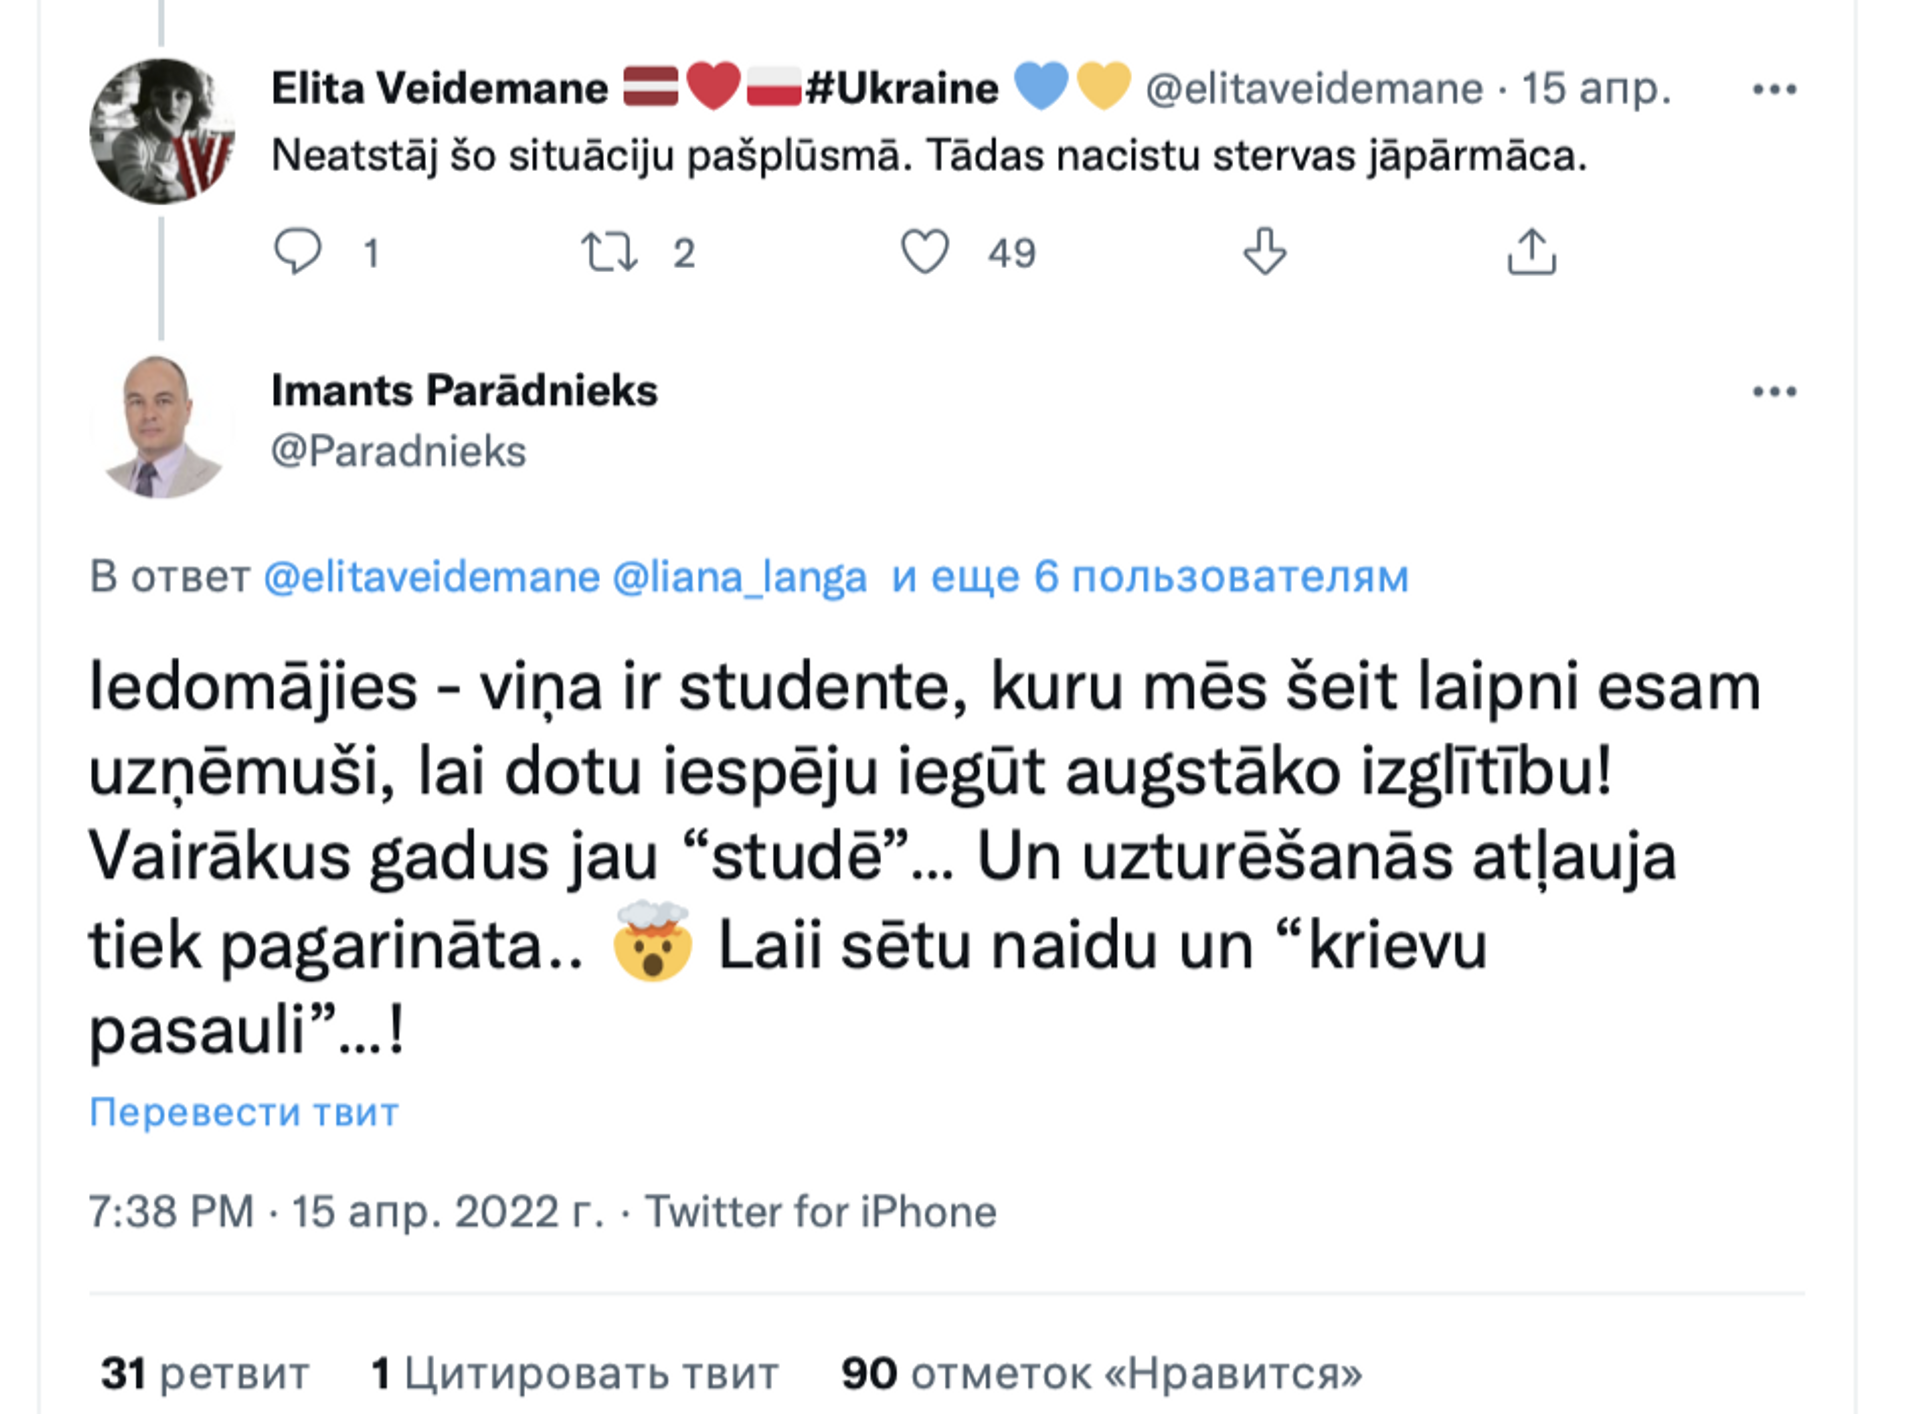 Скриншот поста в Twitter  - Sputnik Latvija, 1920, 21.04.2022